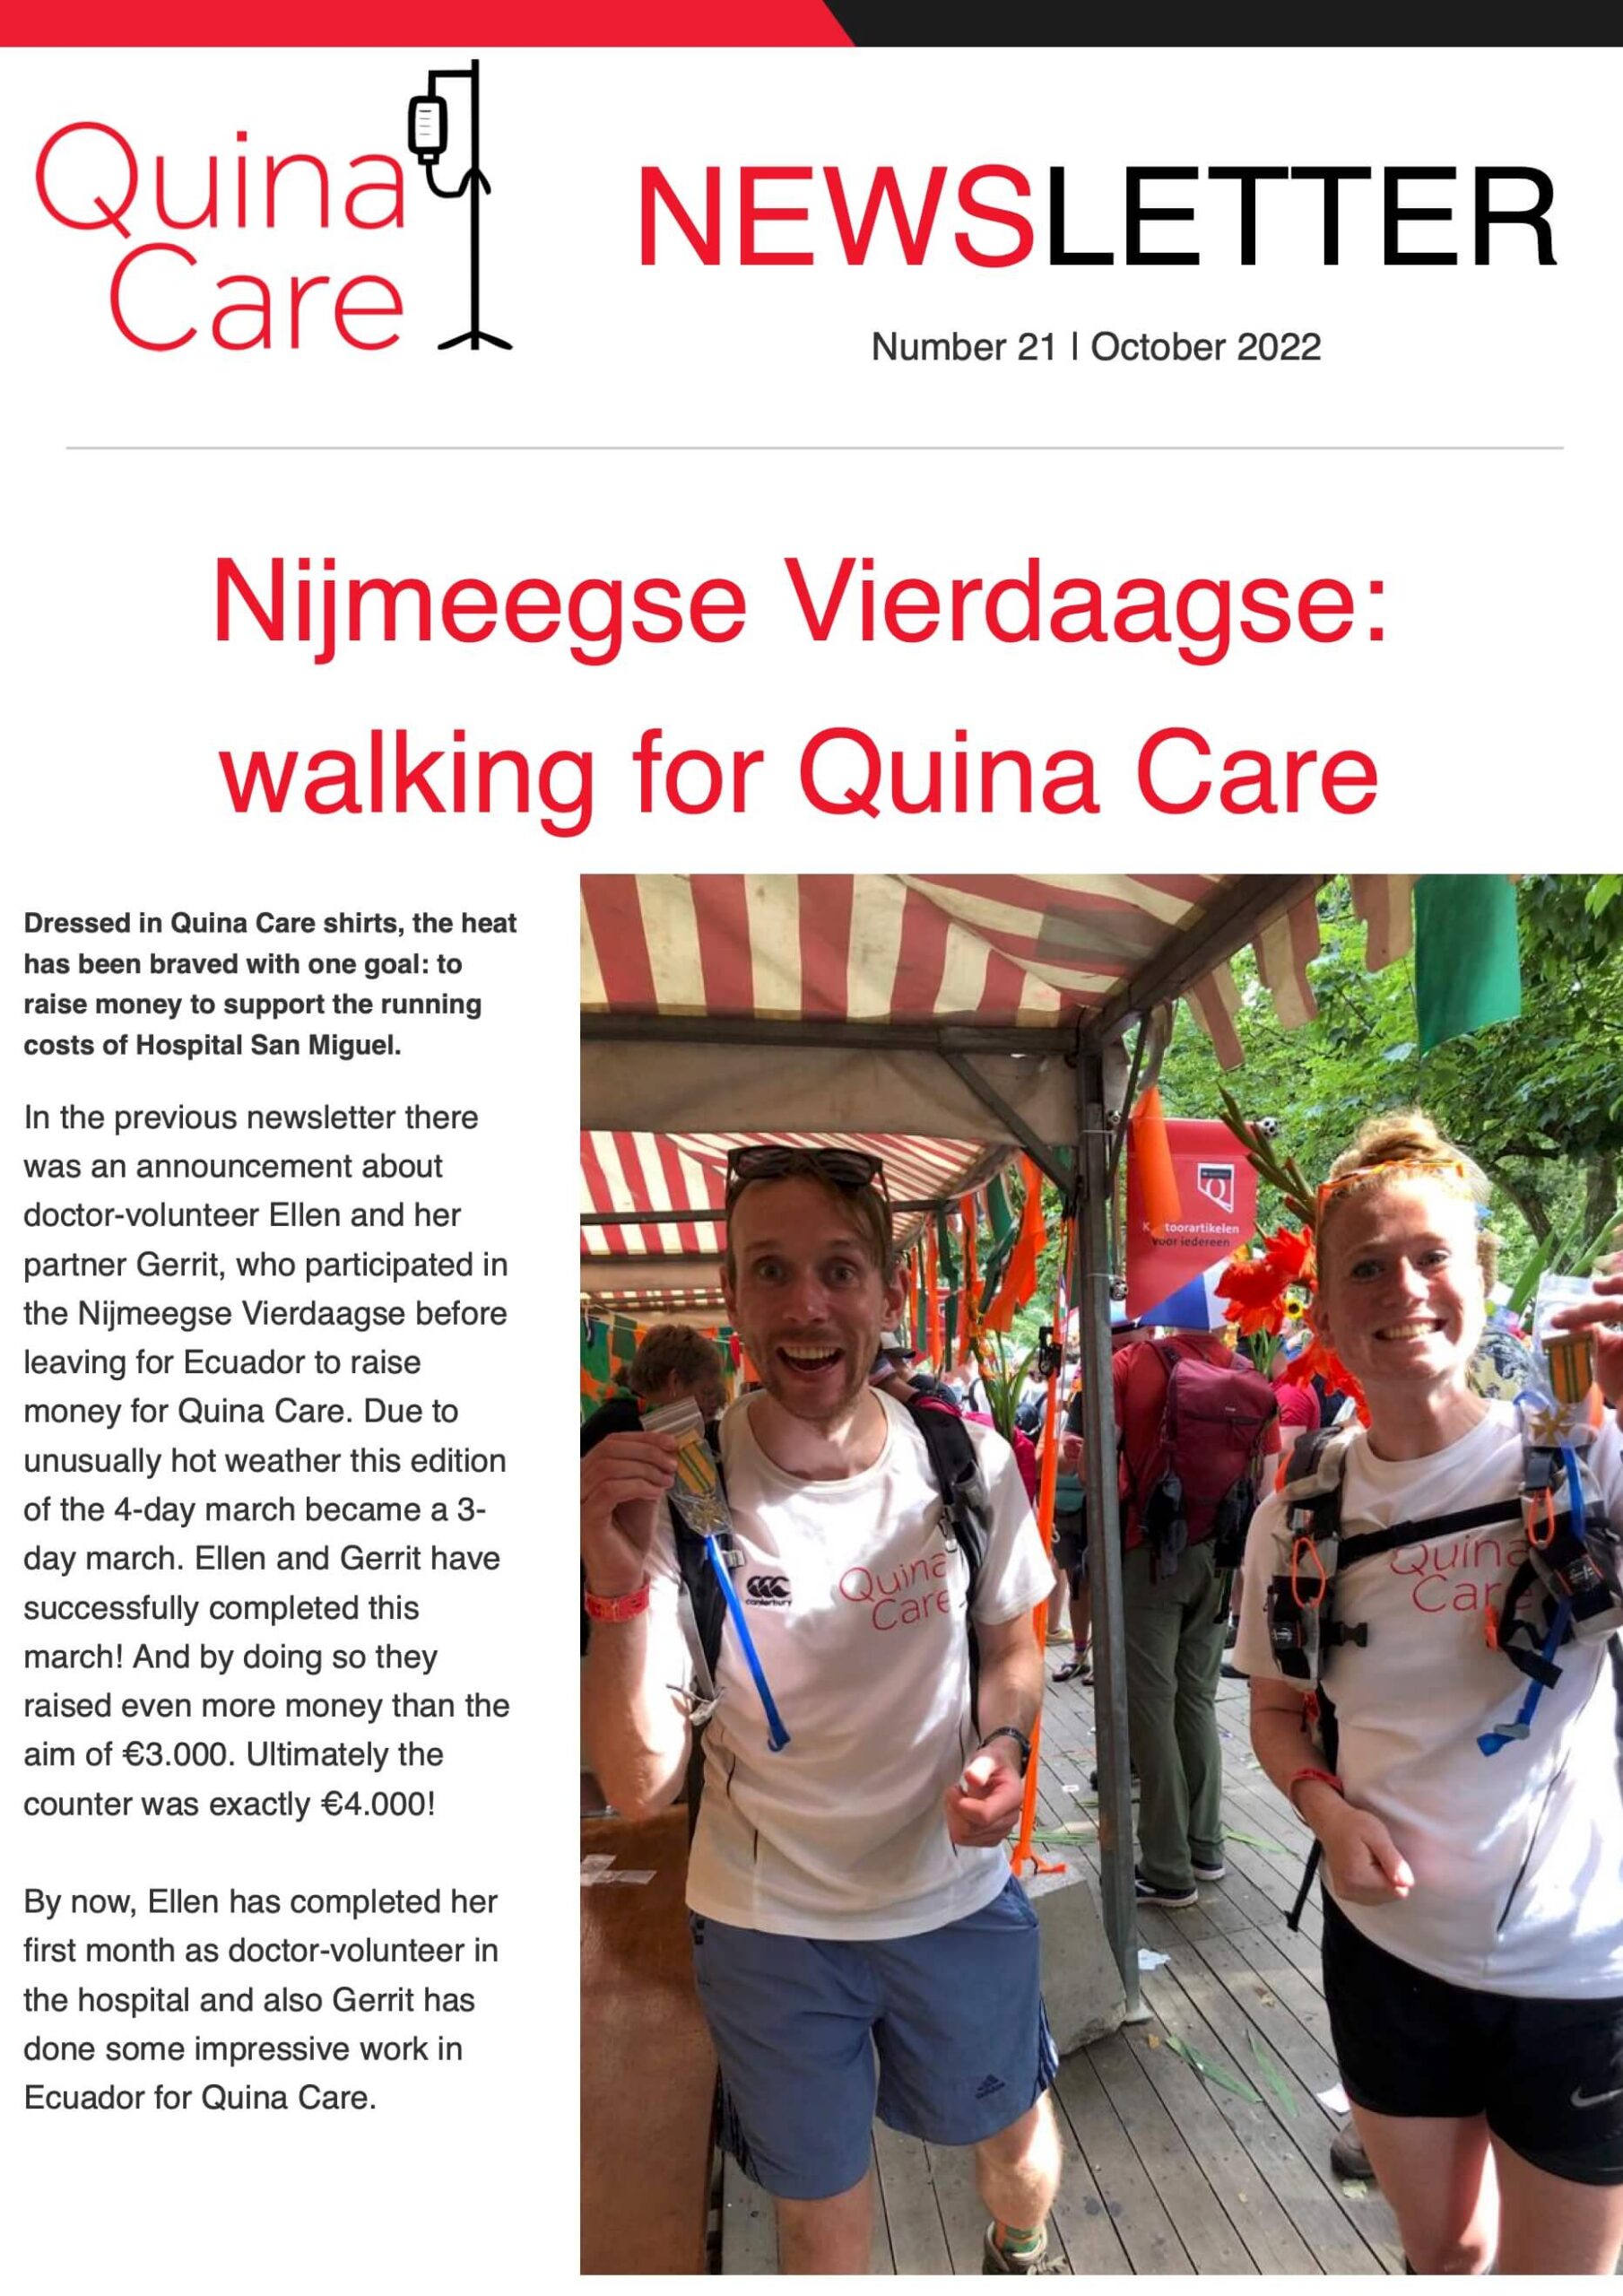 Quina Care Newsletter - October 2022